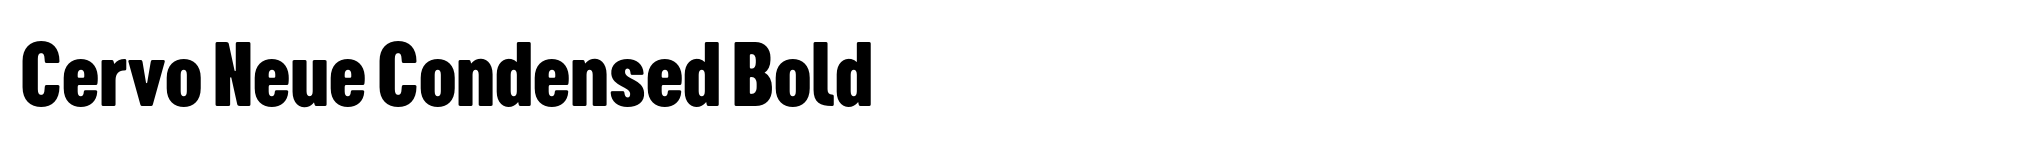 Cervo Neue Condensed Bold image